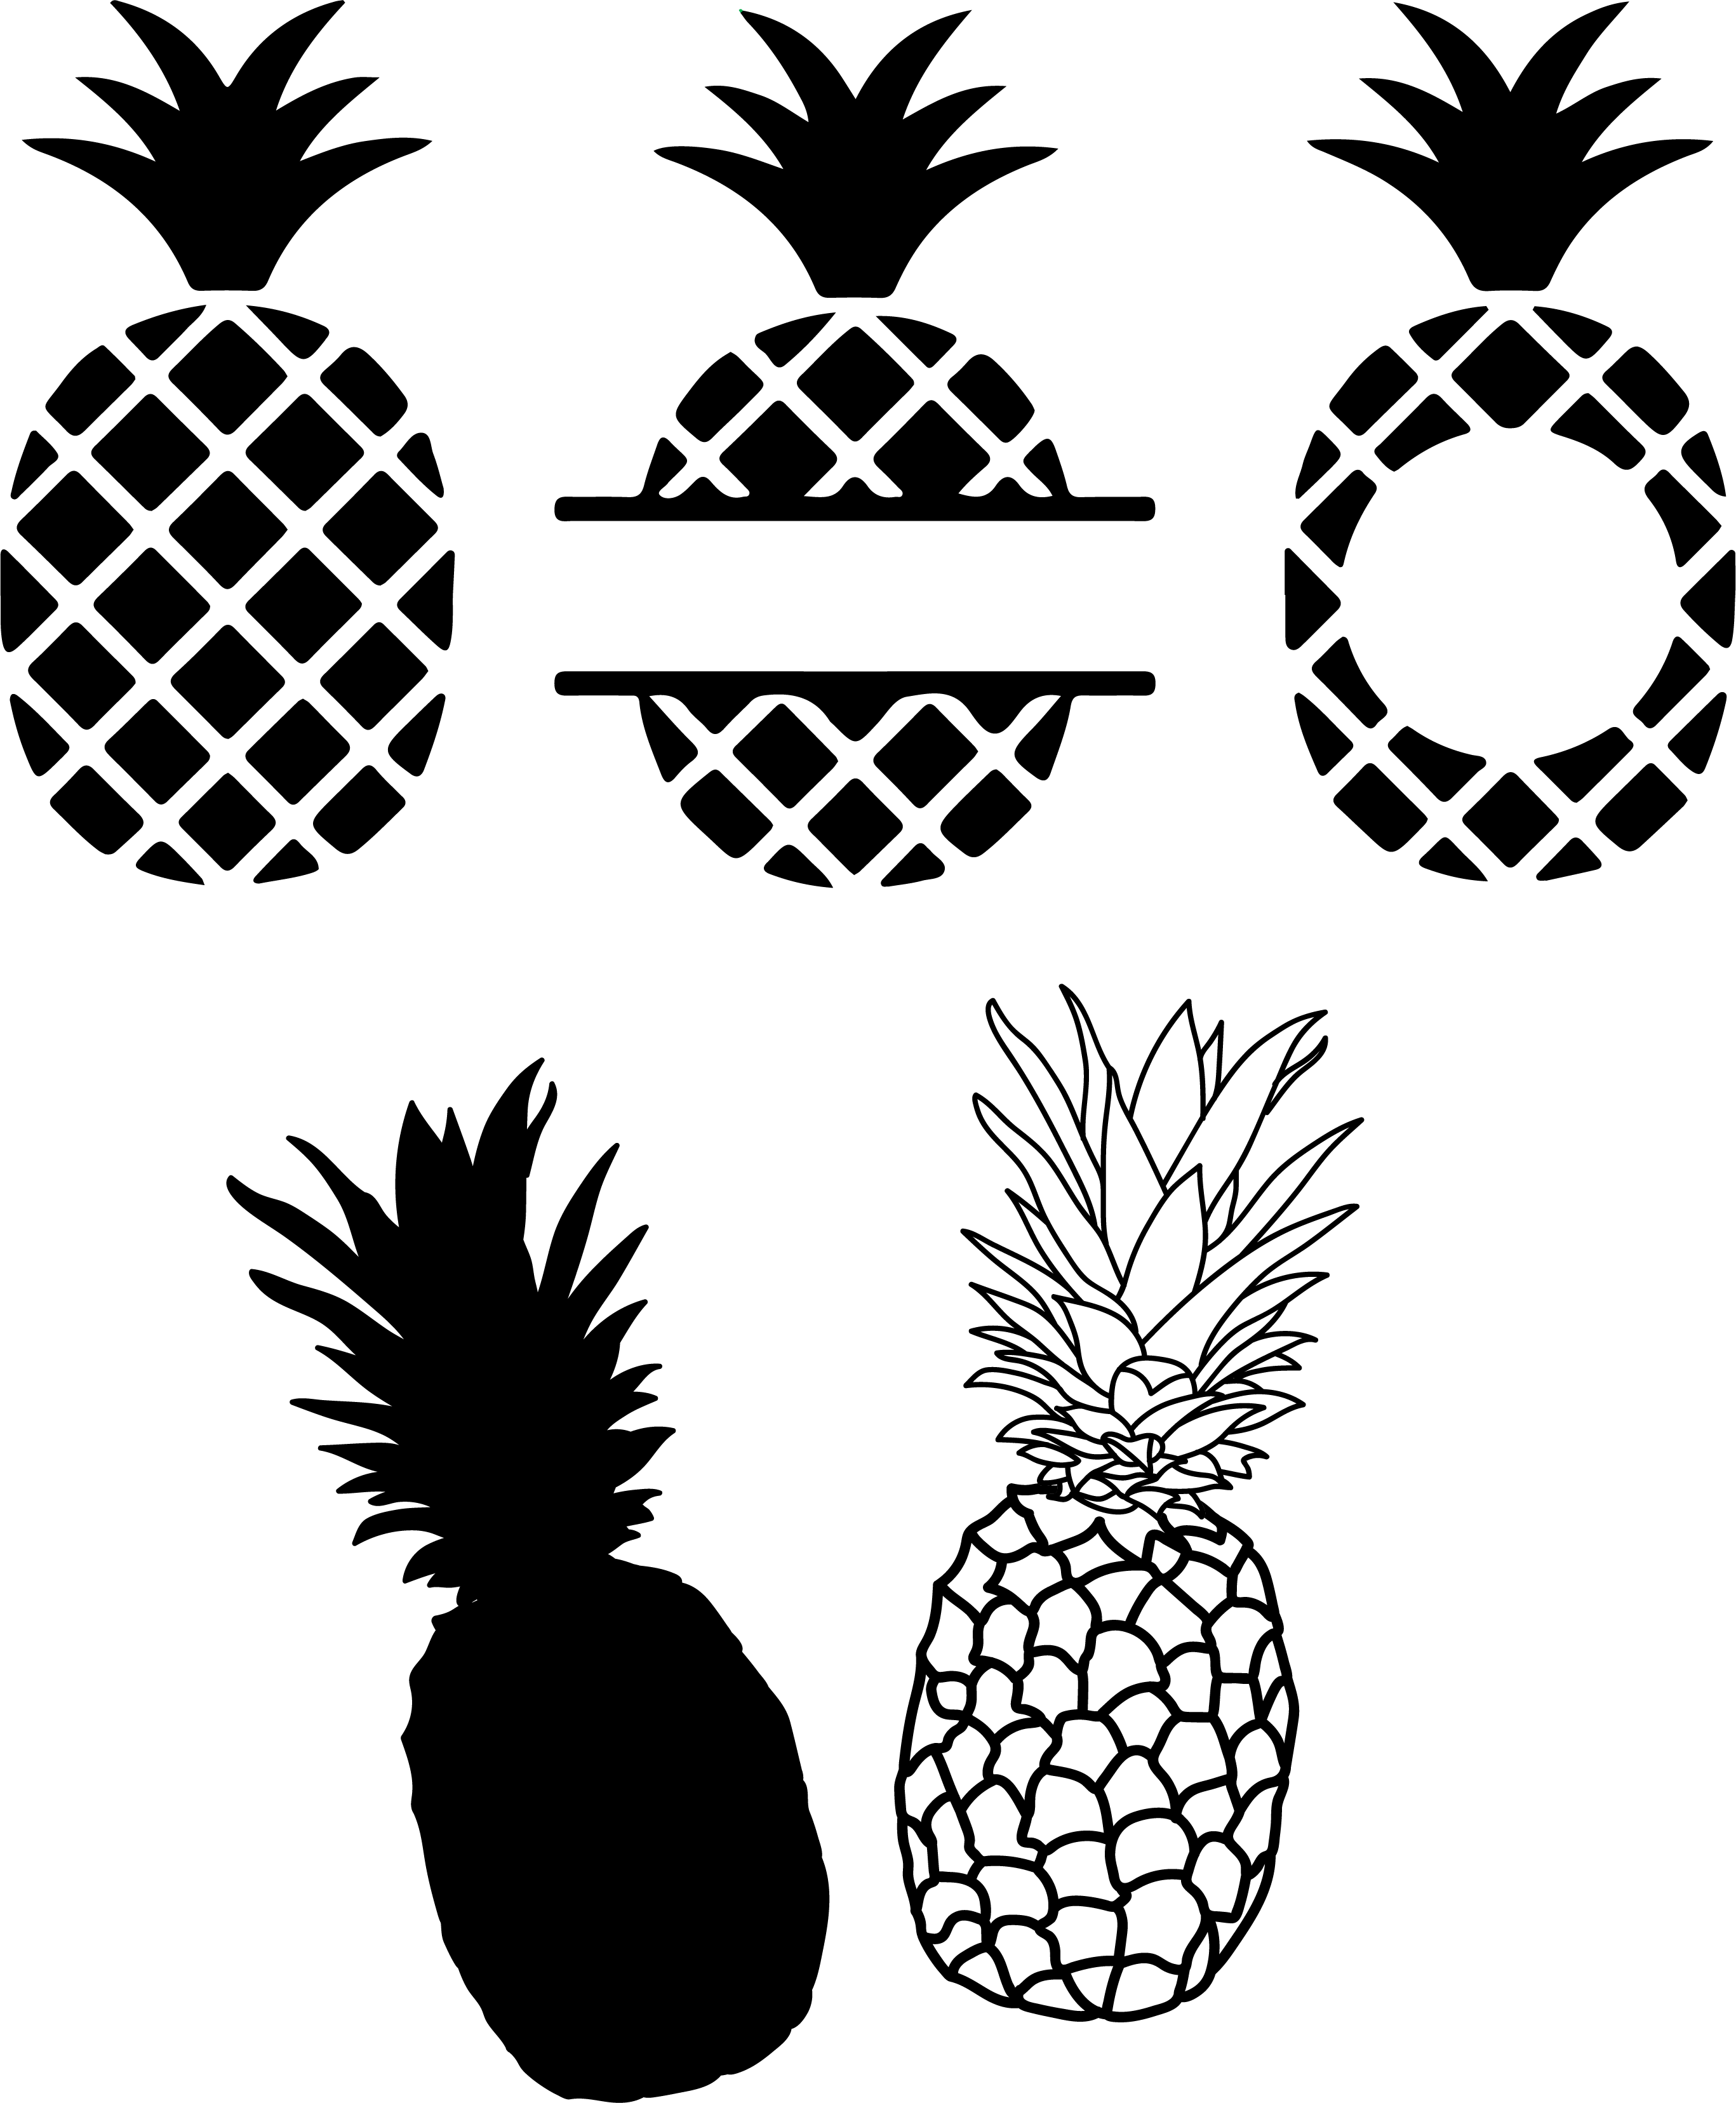 pineapple-01-01